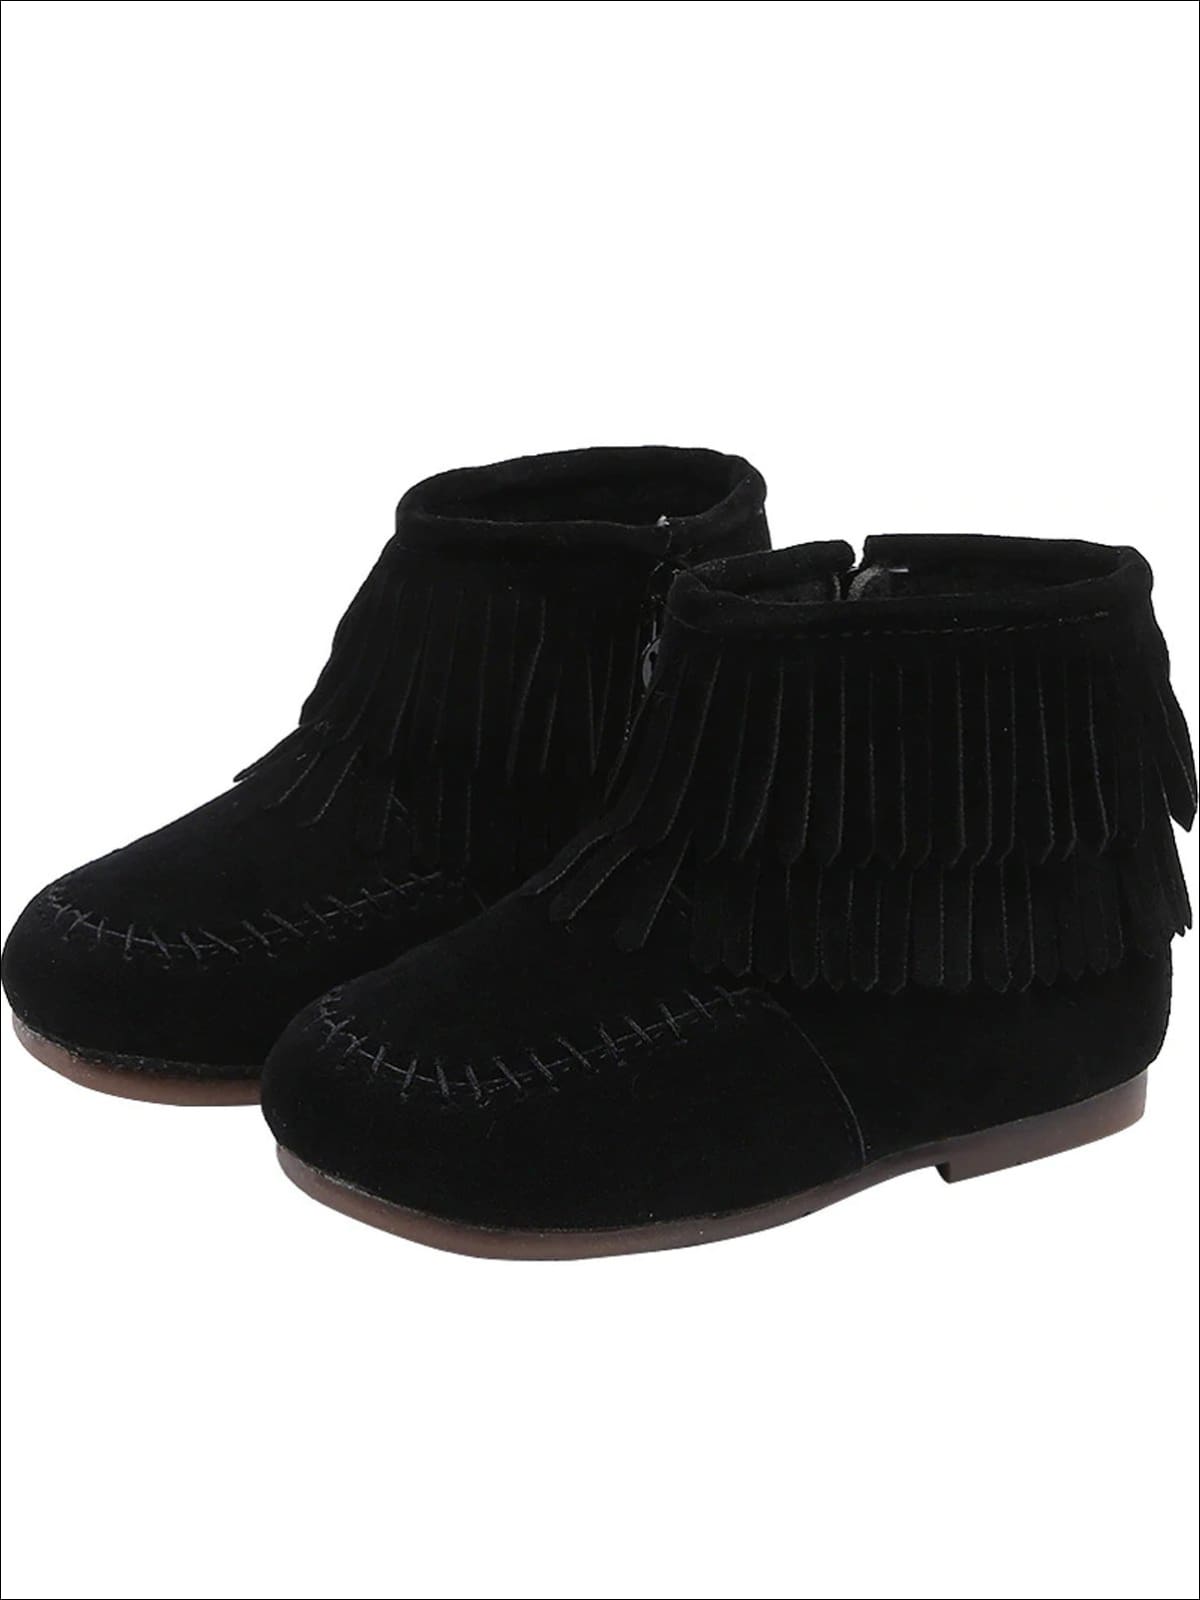 Louise et Cie Womens Peep Toe Stiletto Suede Fringe Ankle Boots Black Size 37 7